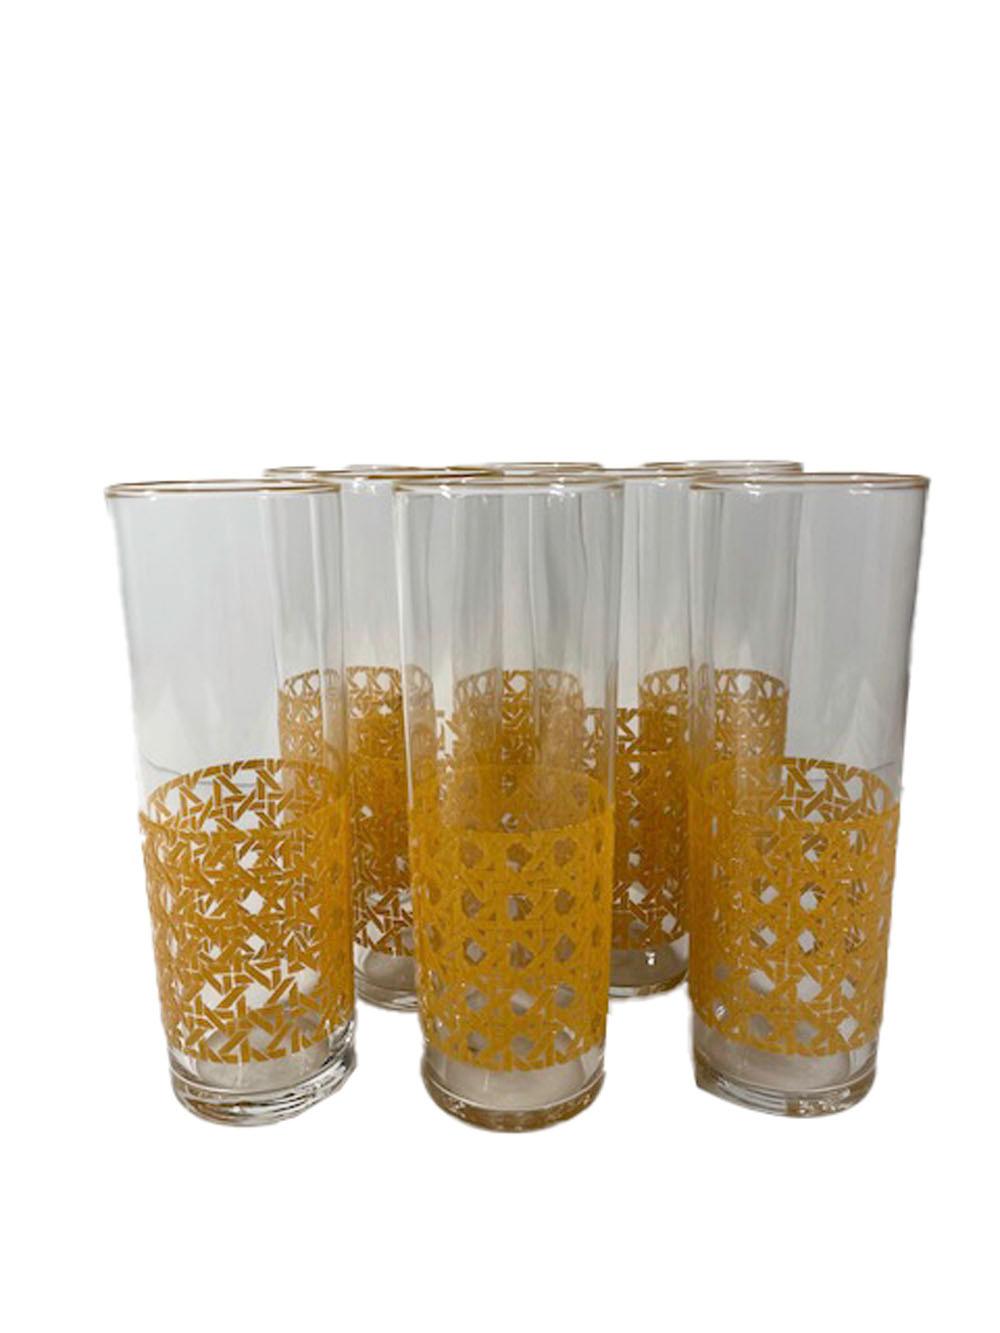 vintage libbey glassware patterns